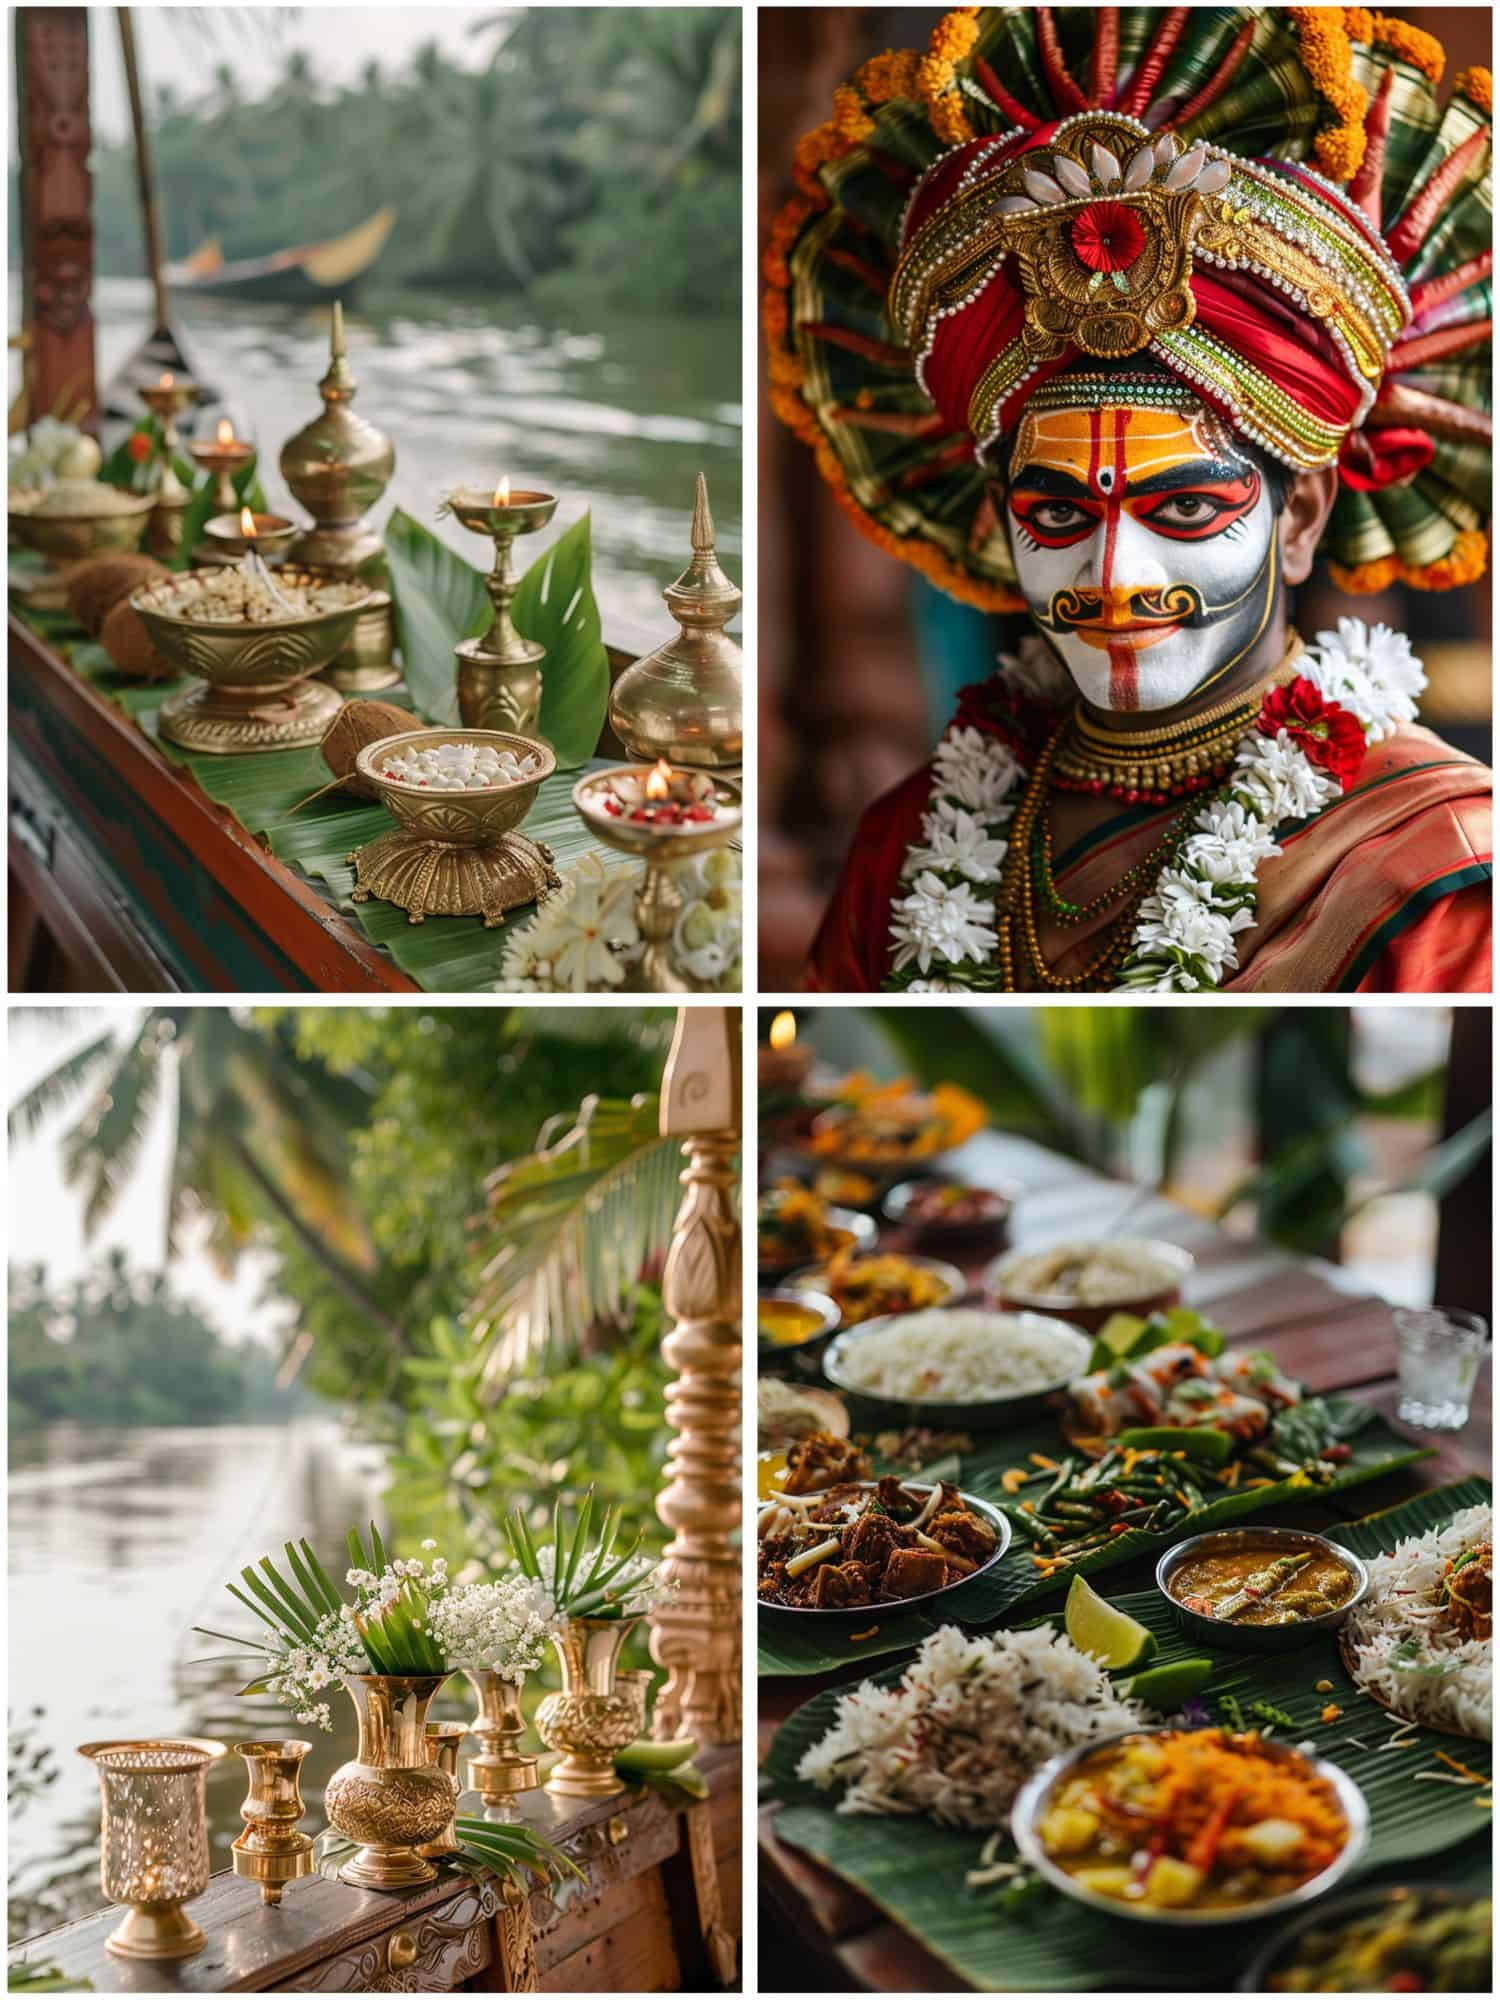 backwater kerala-inspired wedding inspiration